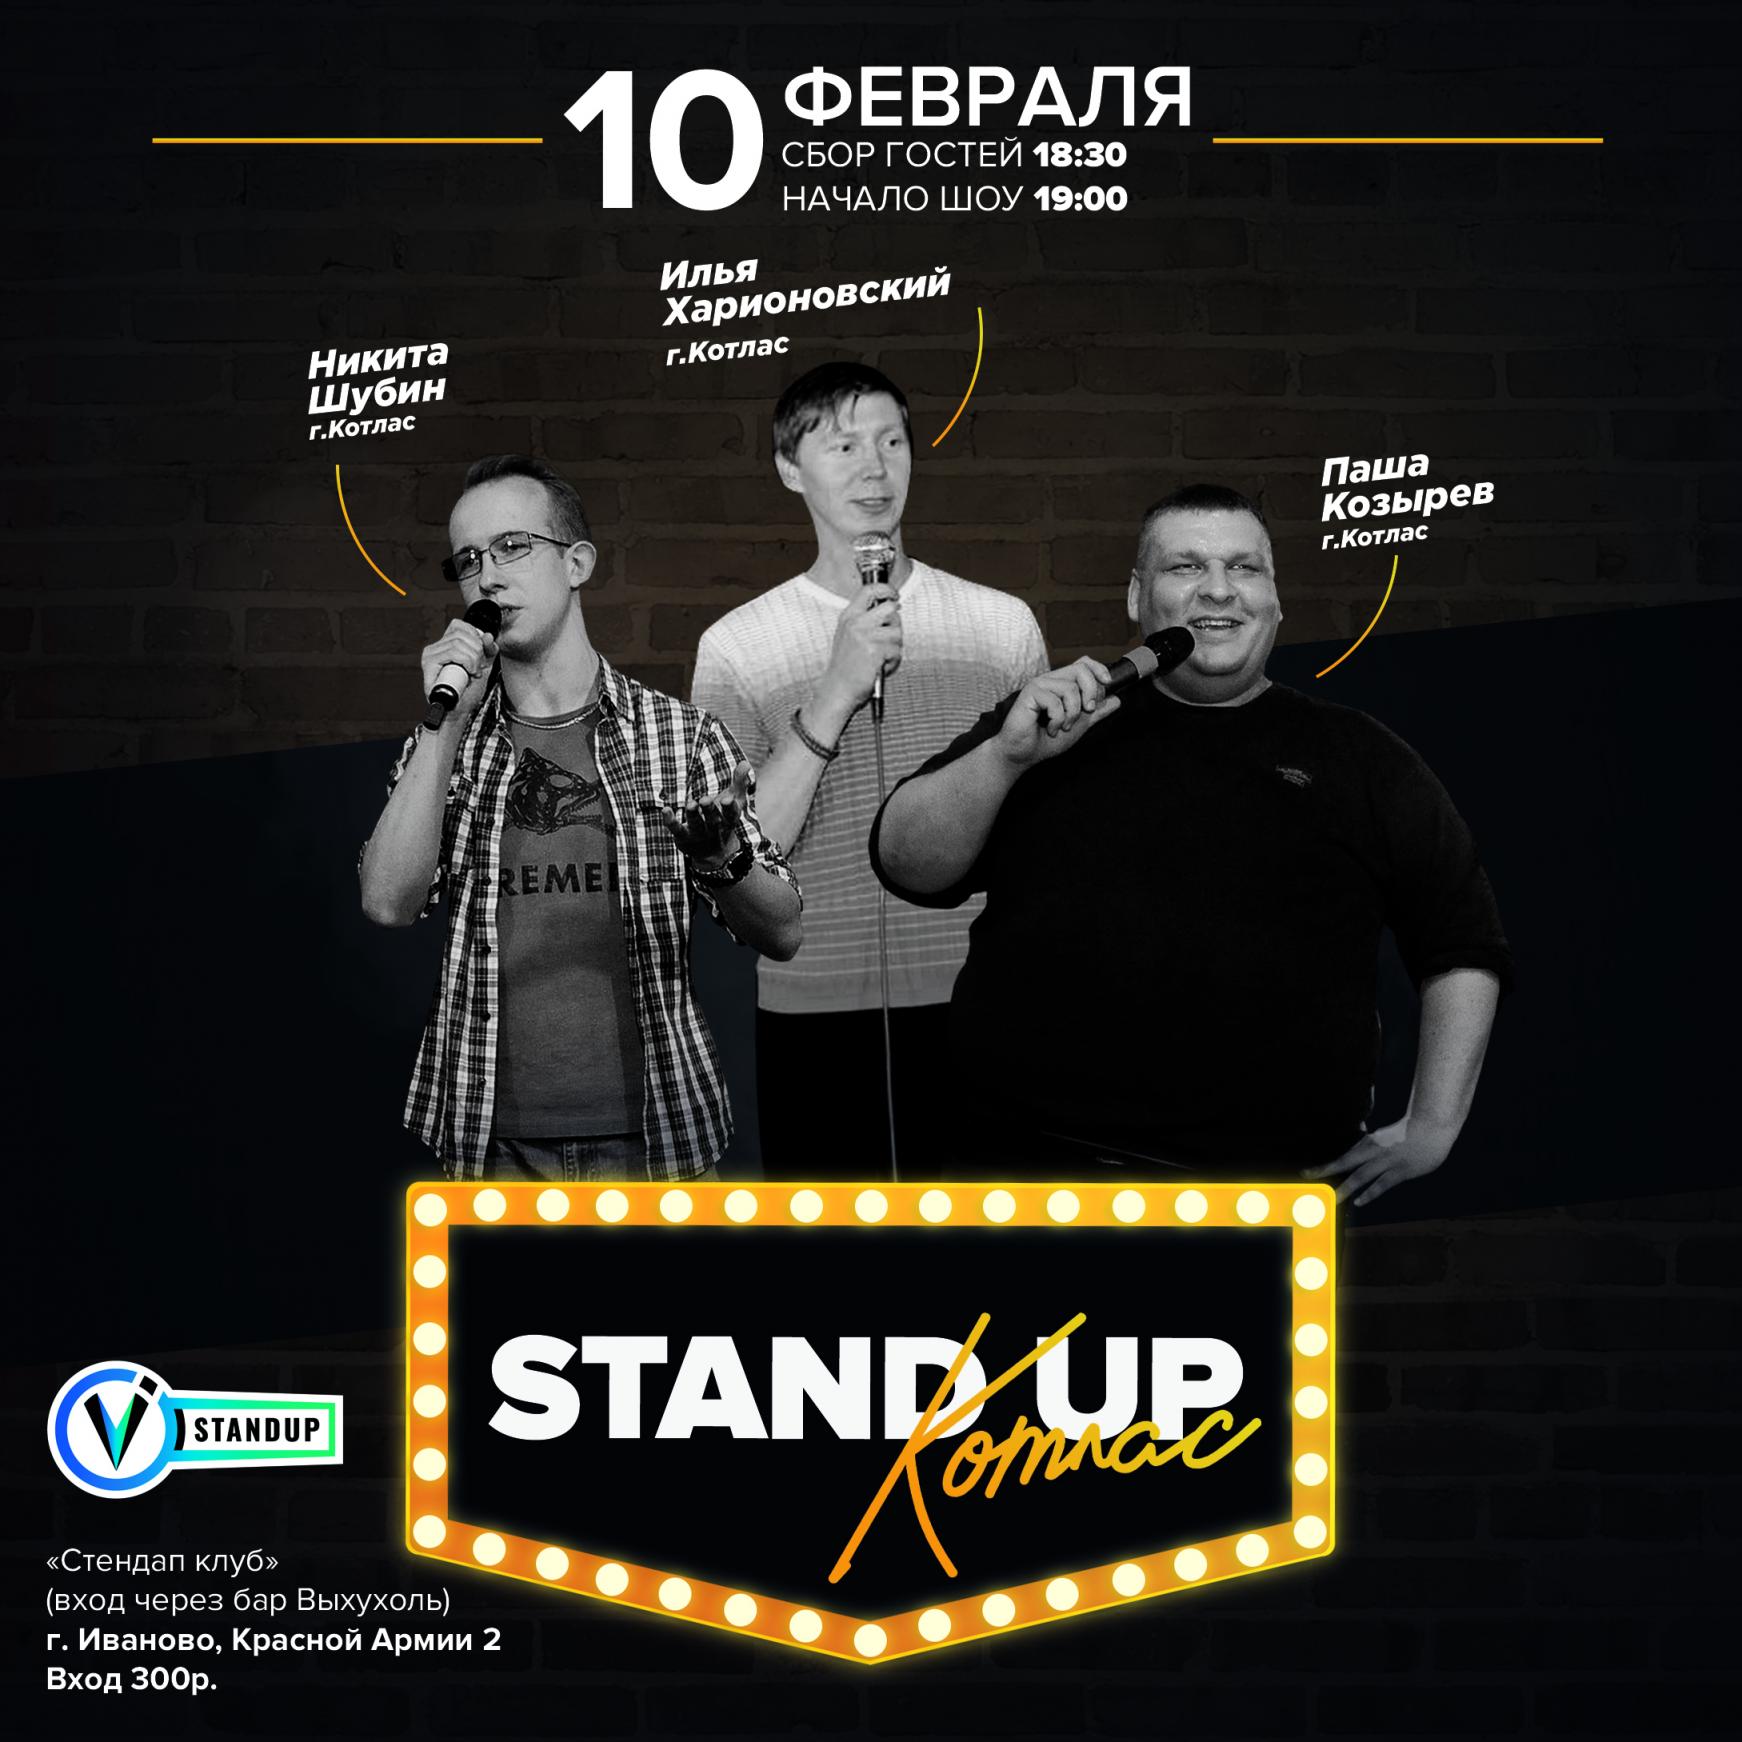 StandUp Котлас в Иванове